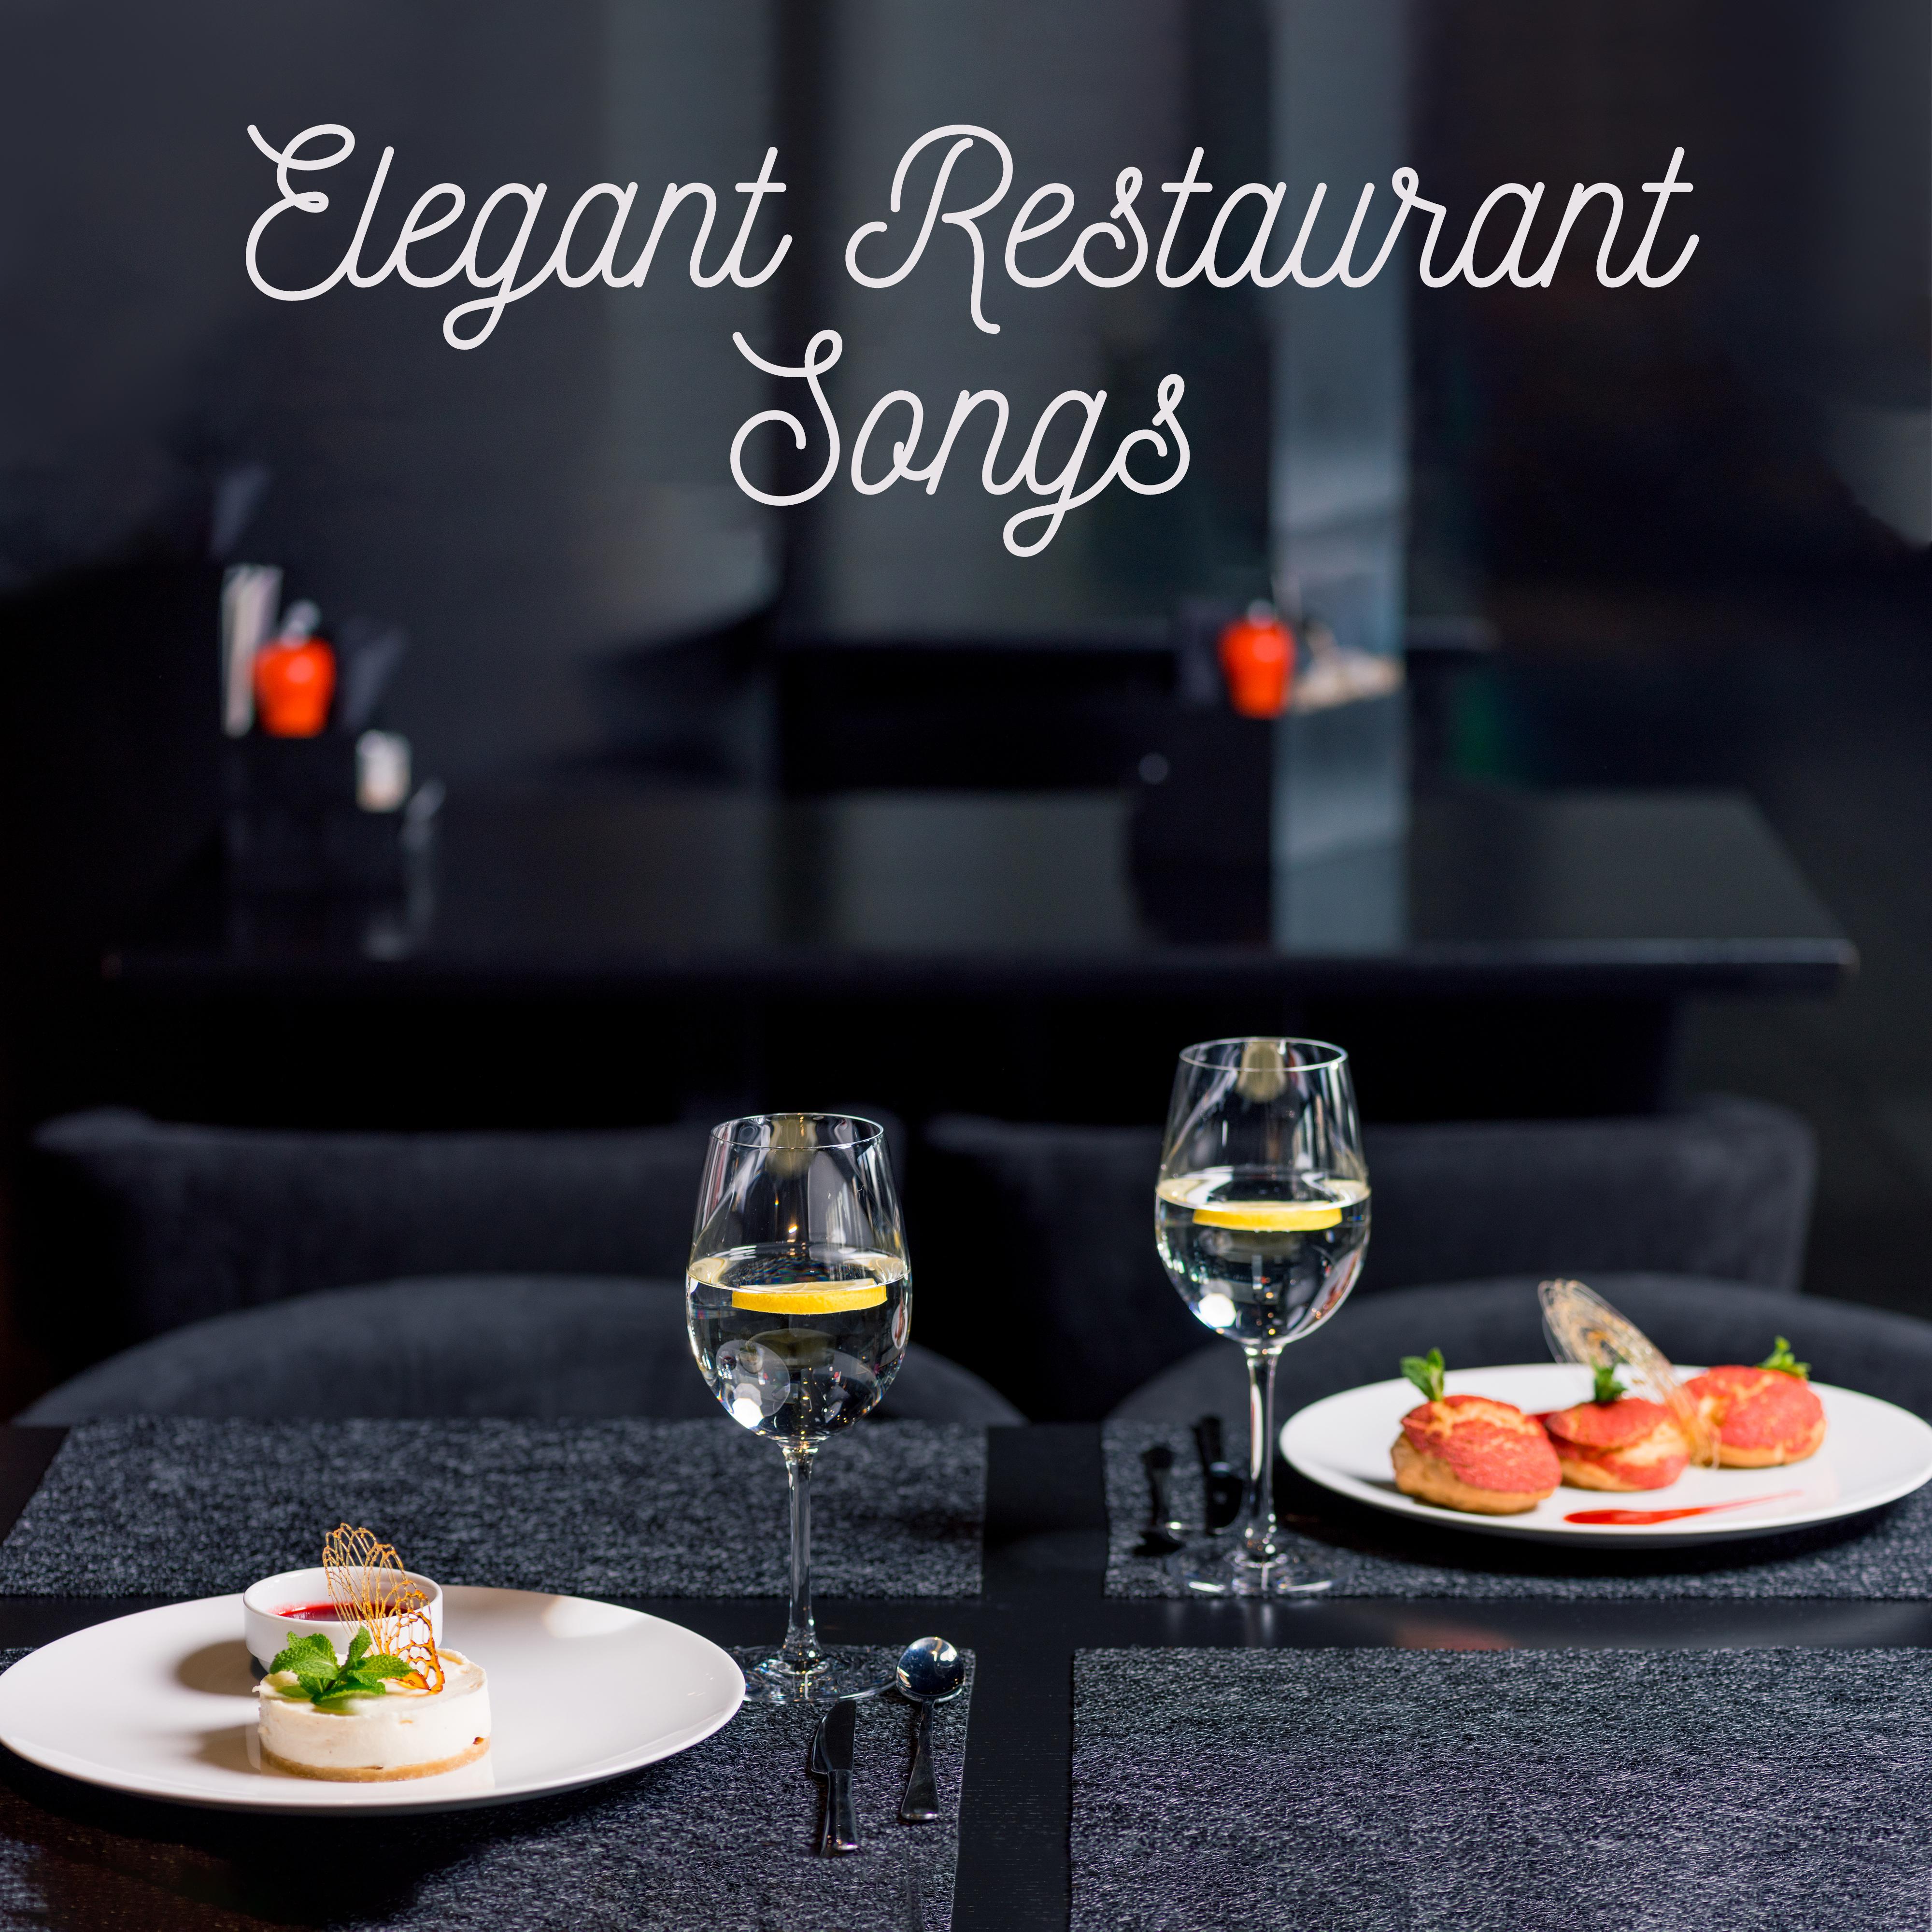 Elegant Restaurant Songs  Jazz Lounge 2019, Dinner Music, Instrumental Jazz Music Ambient, Relaxing Background Jazz